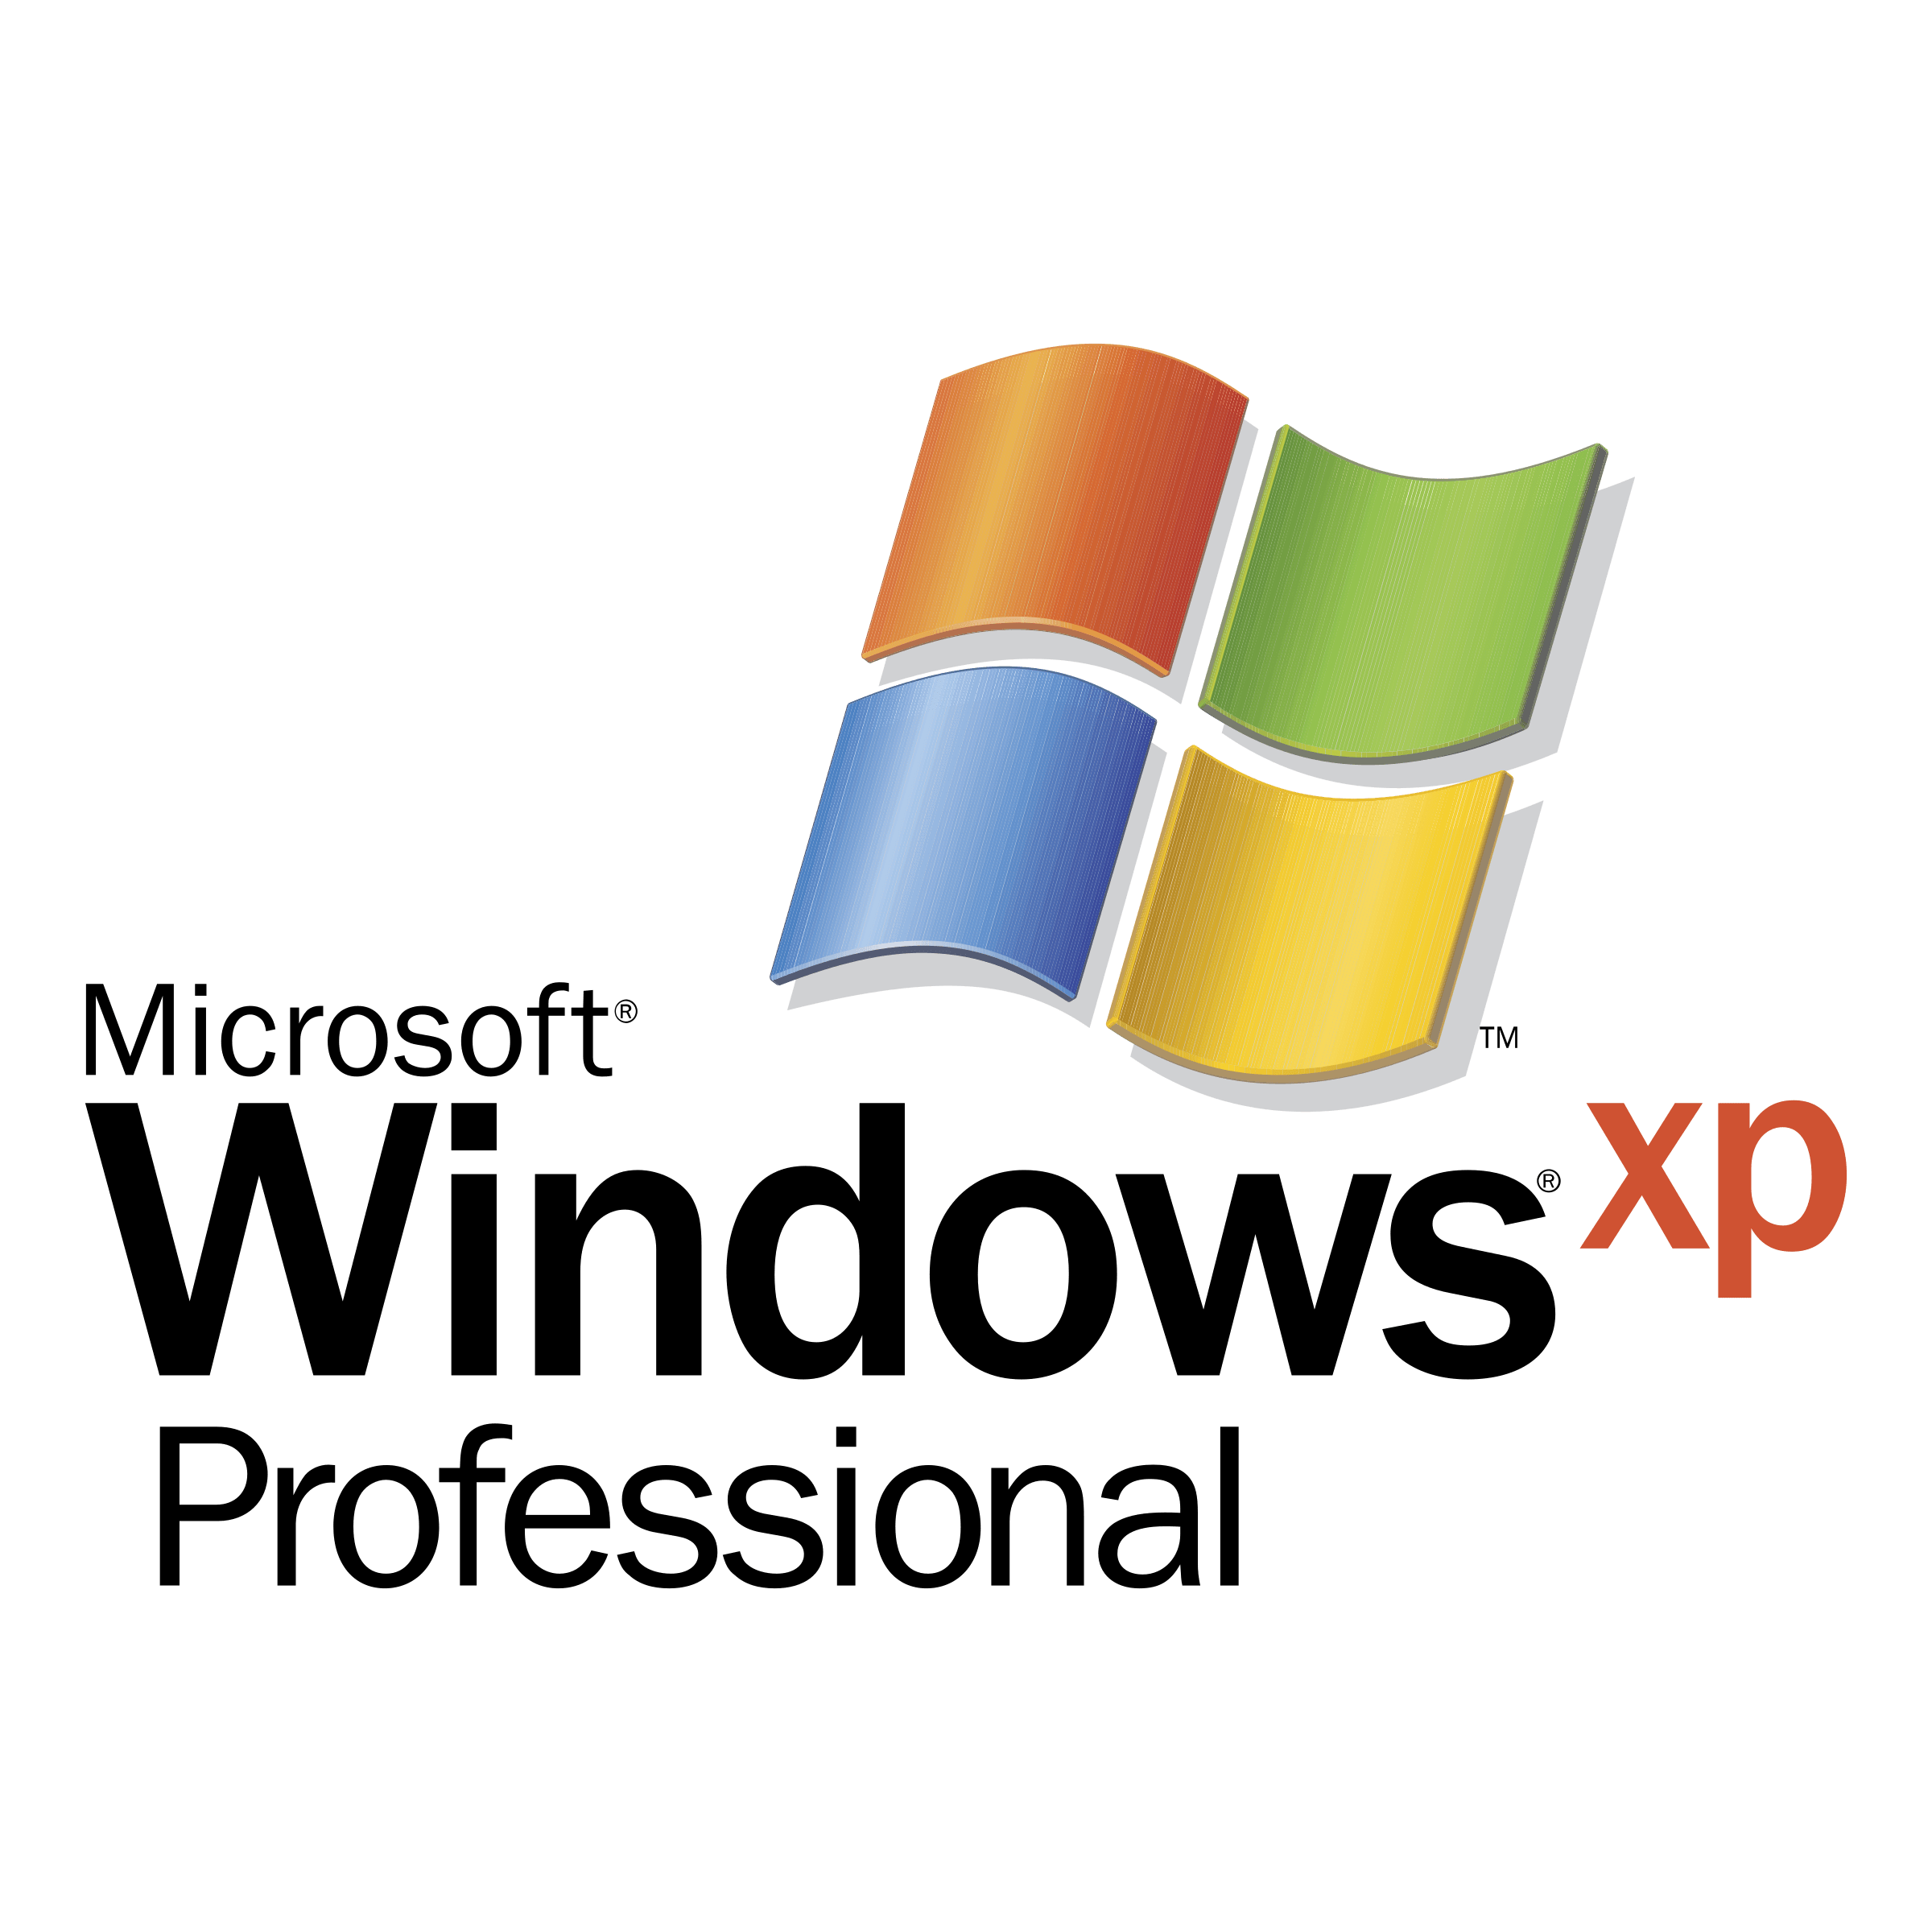 Windows 1 Logo - Microsoft Windows XP Professional Logo PNG Transparent & SVG Vector